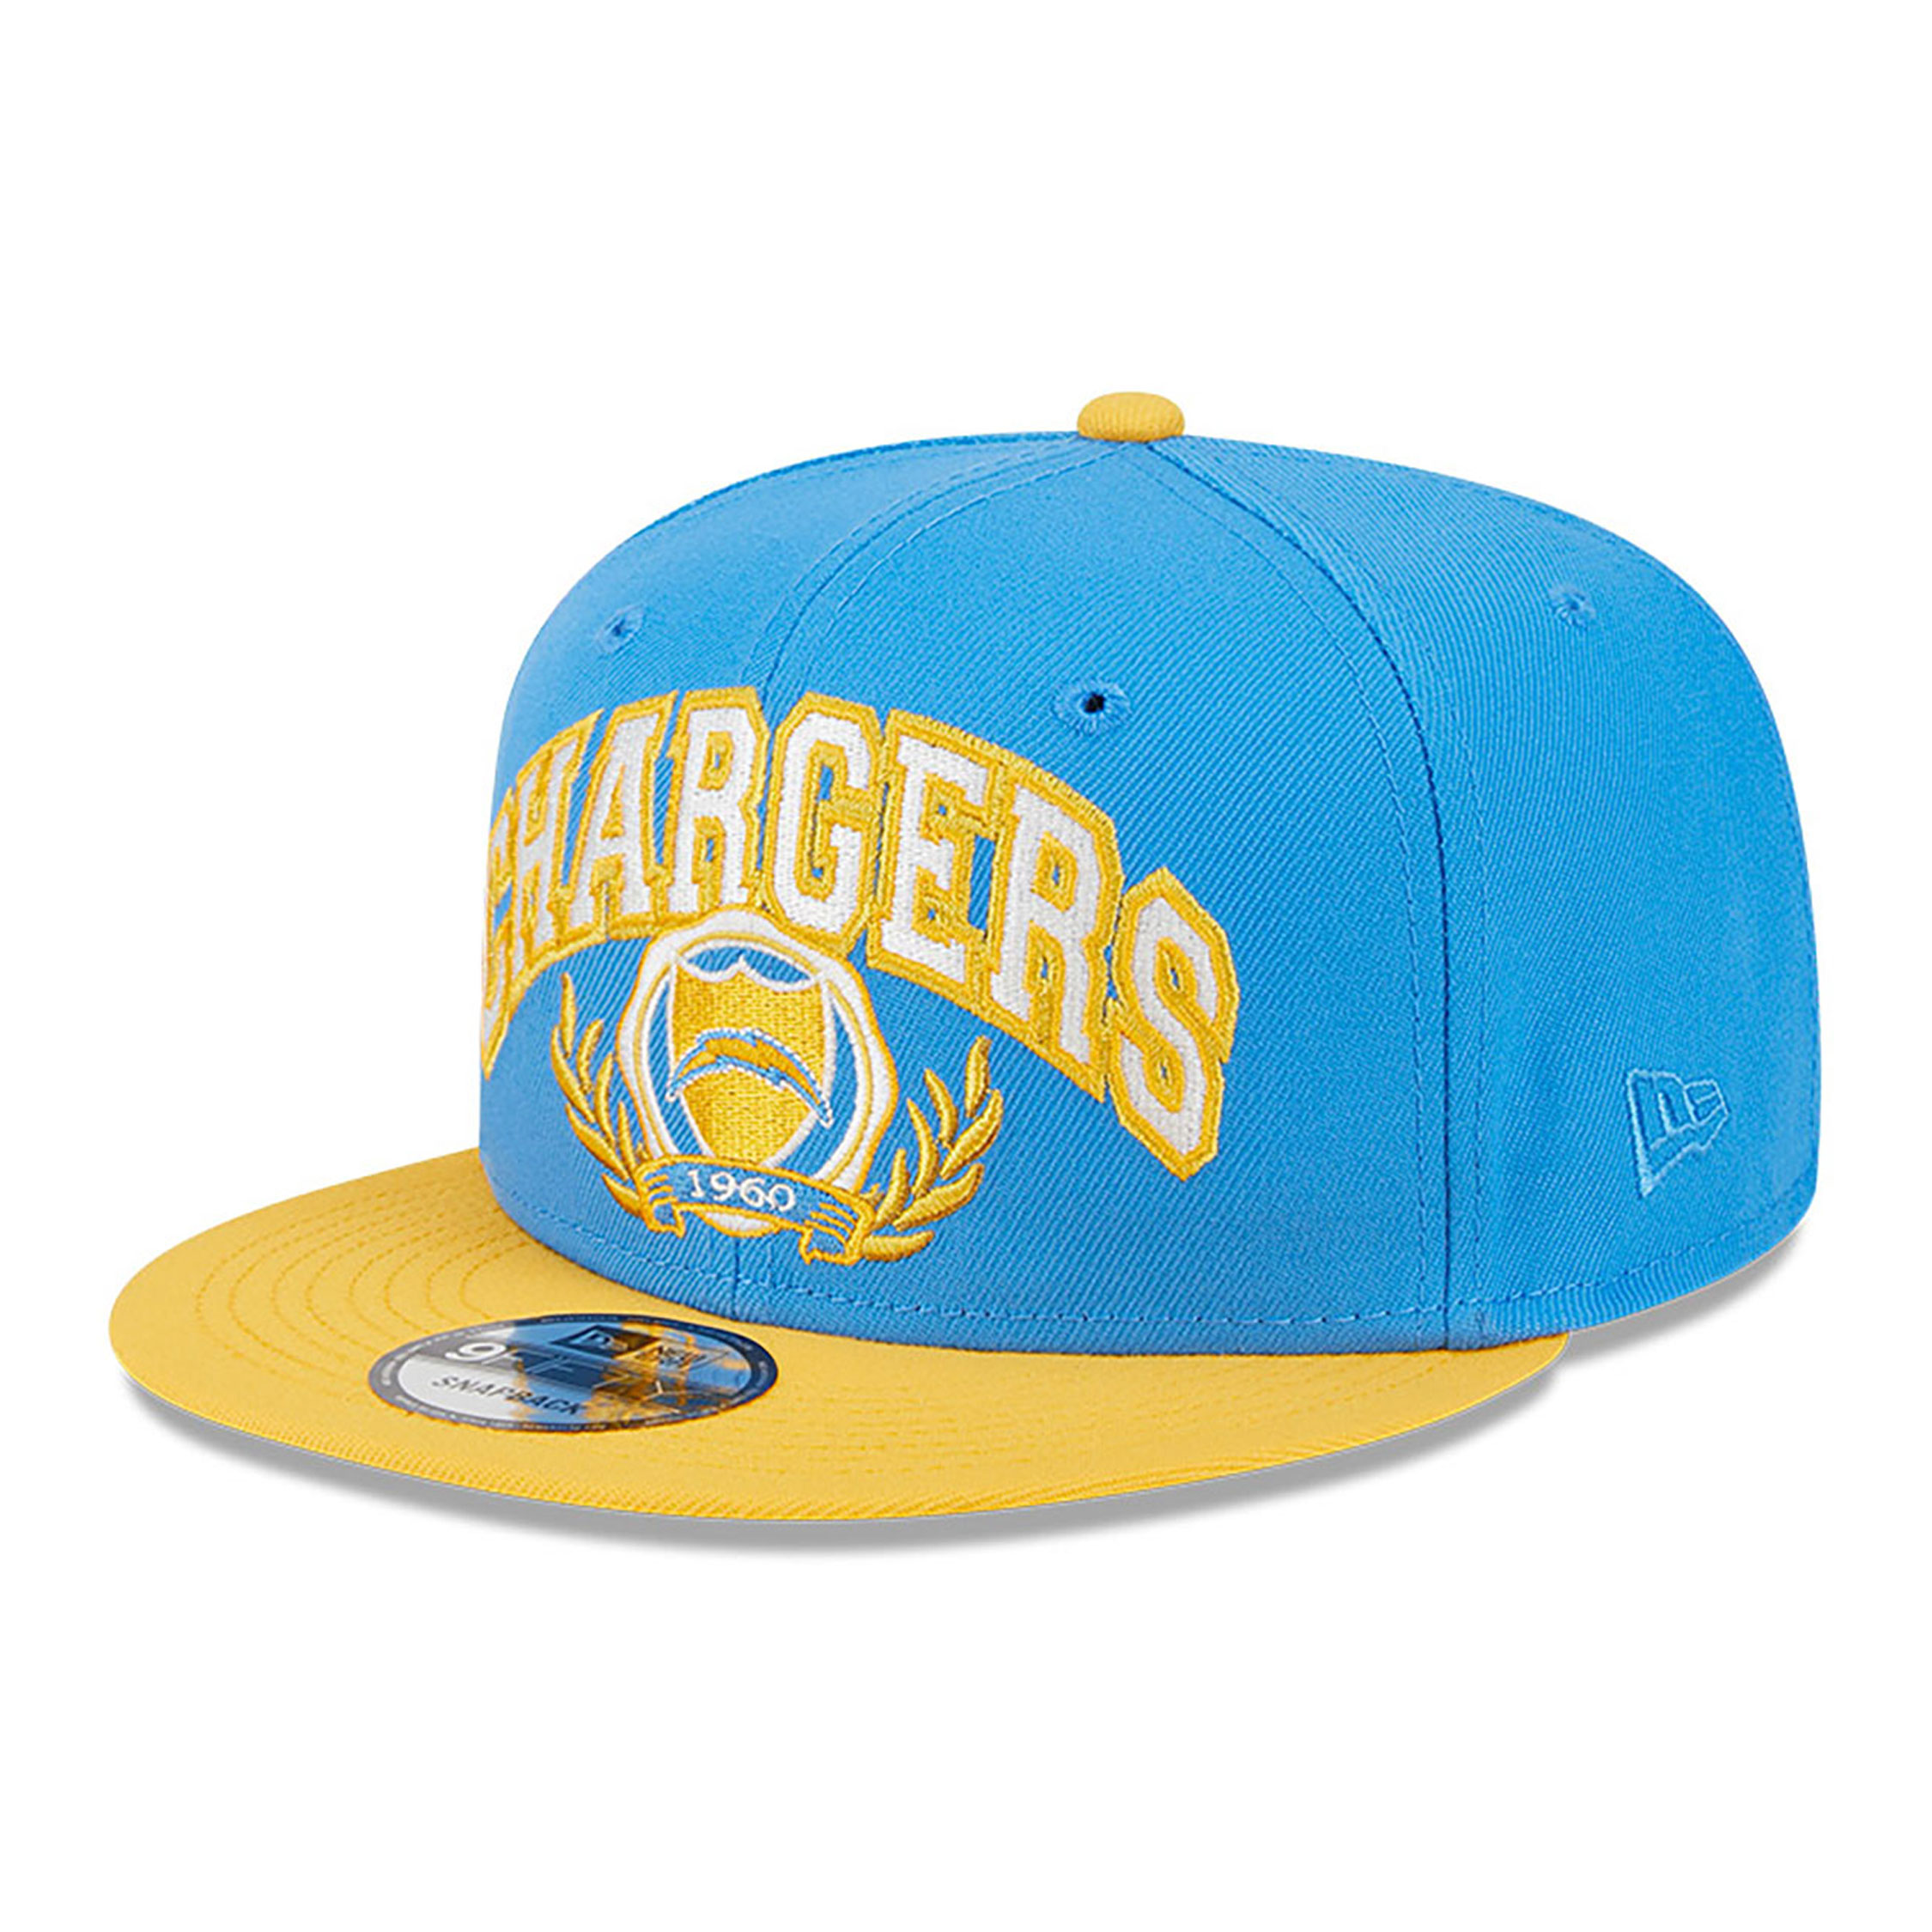 LA Chargers NFL Team Blue 9FIFTY Snapback Cap